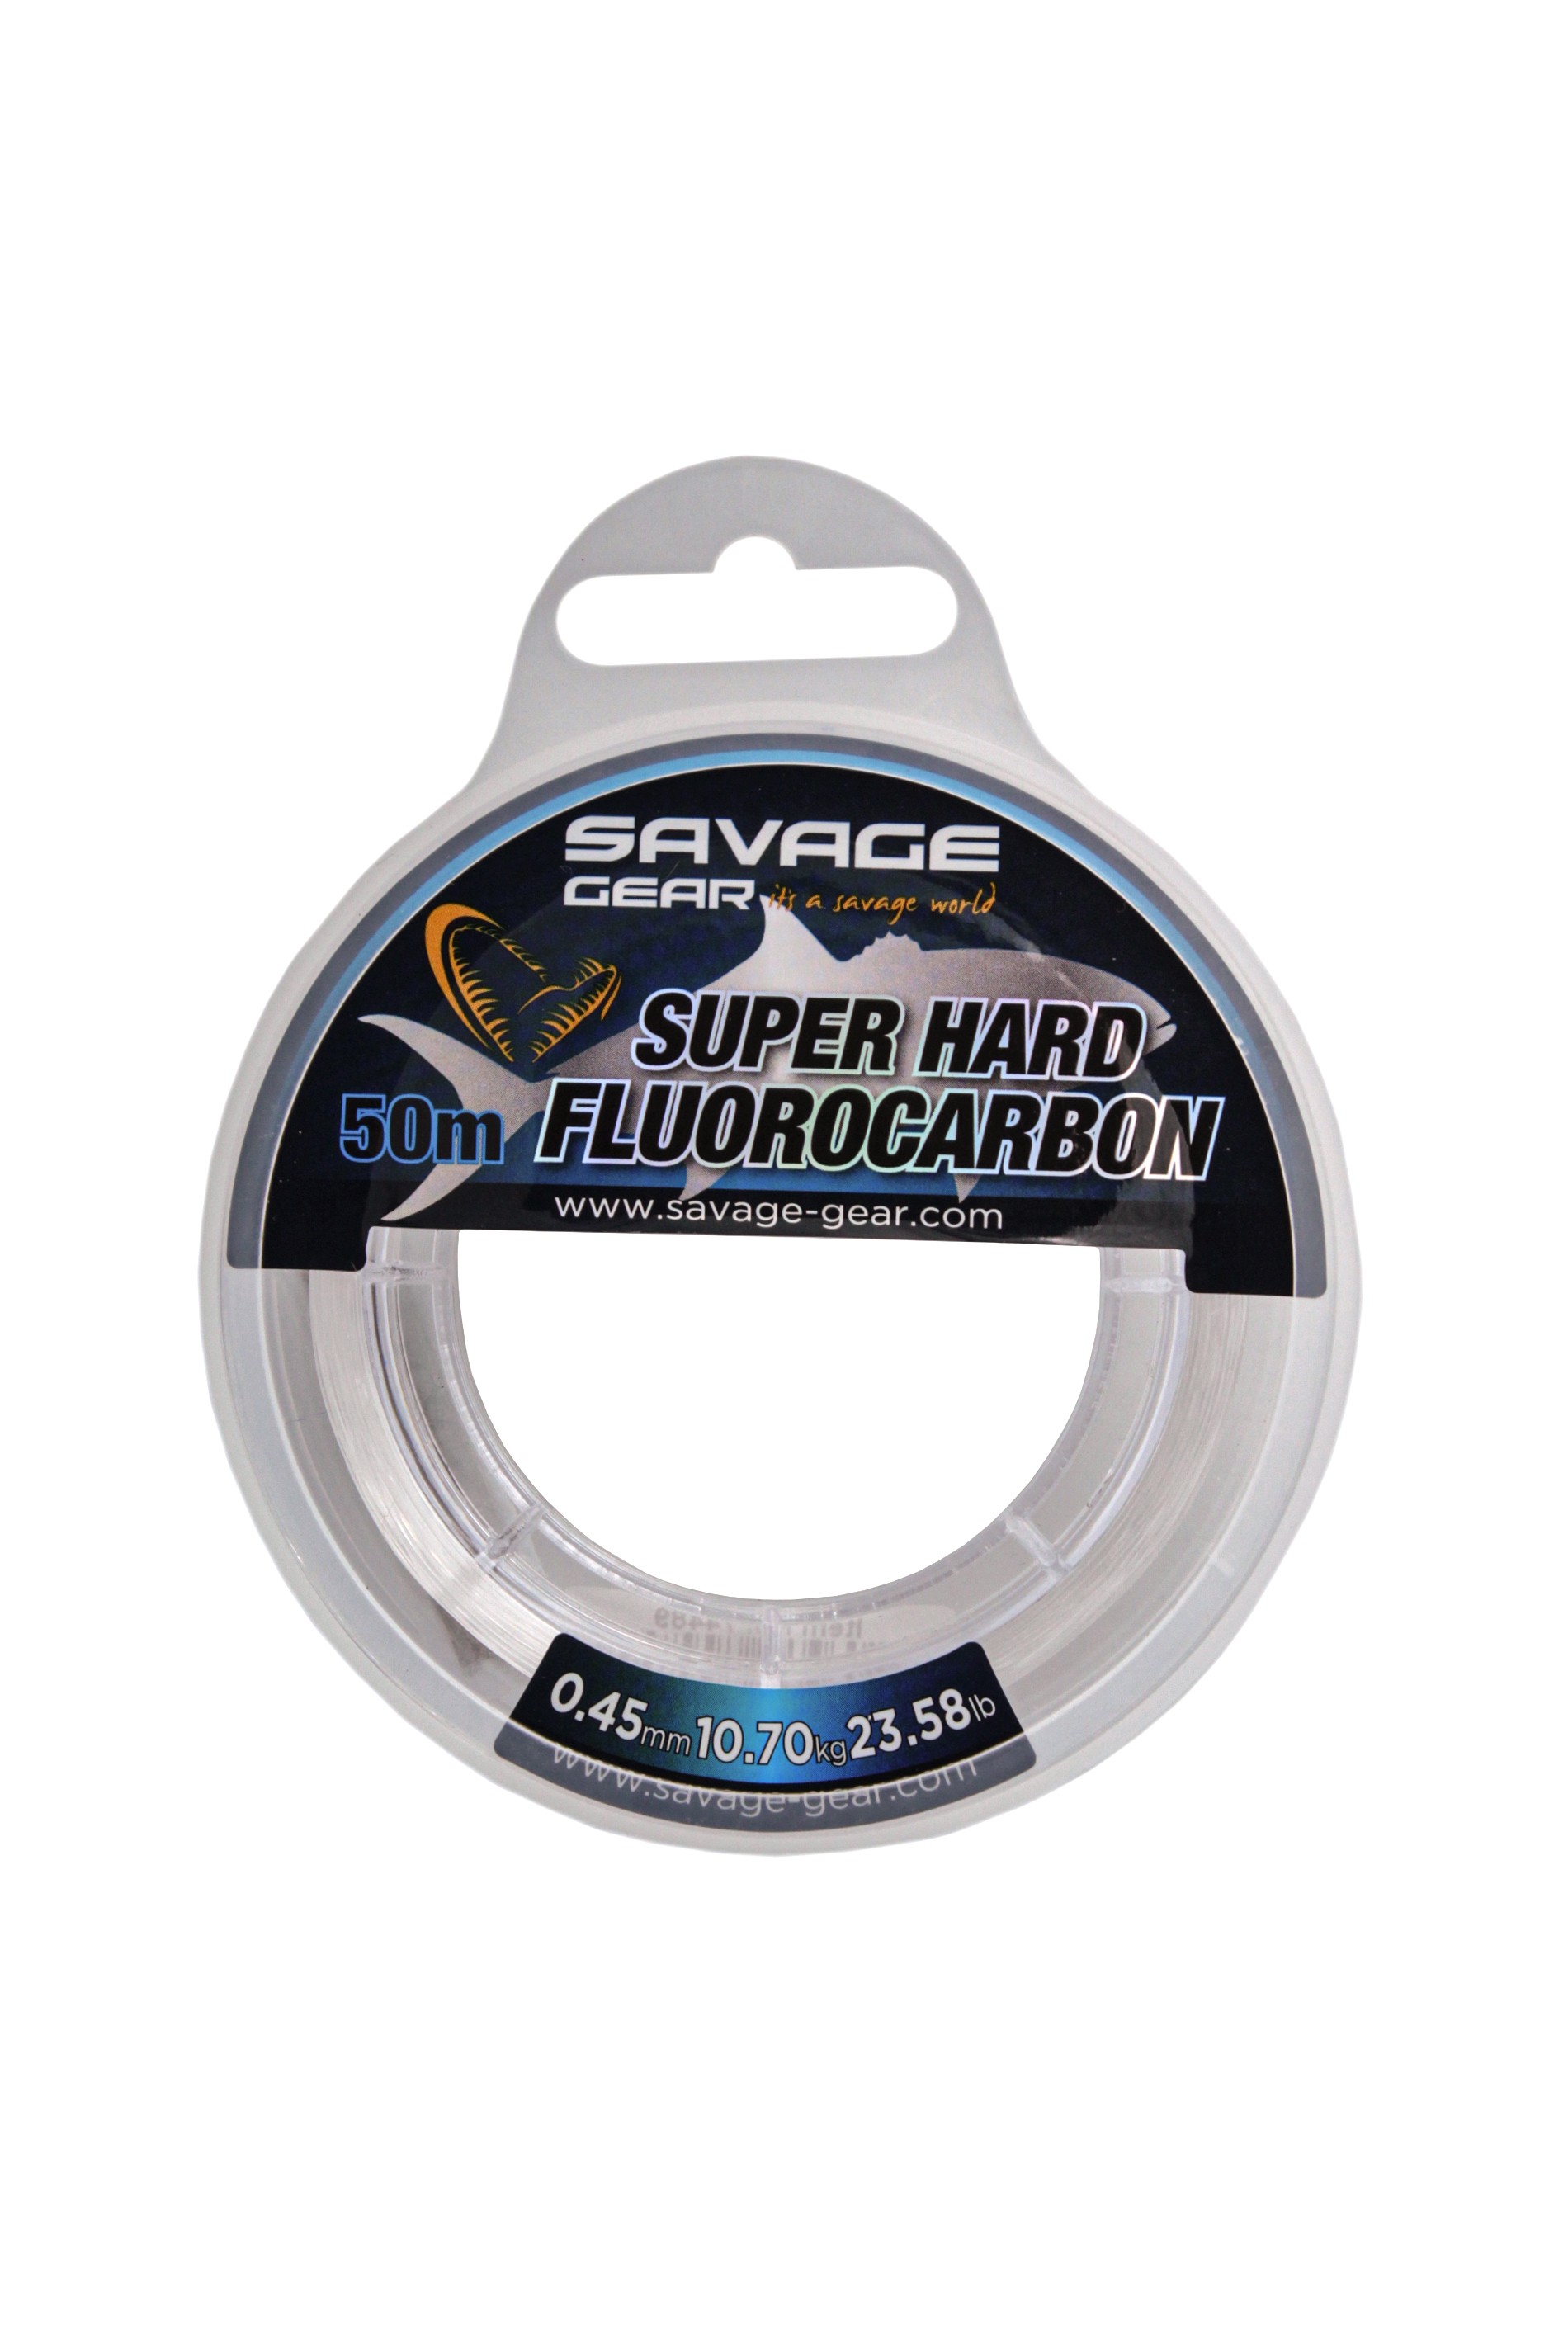 Леска Savage Gear Super hard fluorocarbon 50м 0,45мм 10,7кг 23,58lbs clear - фото 1